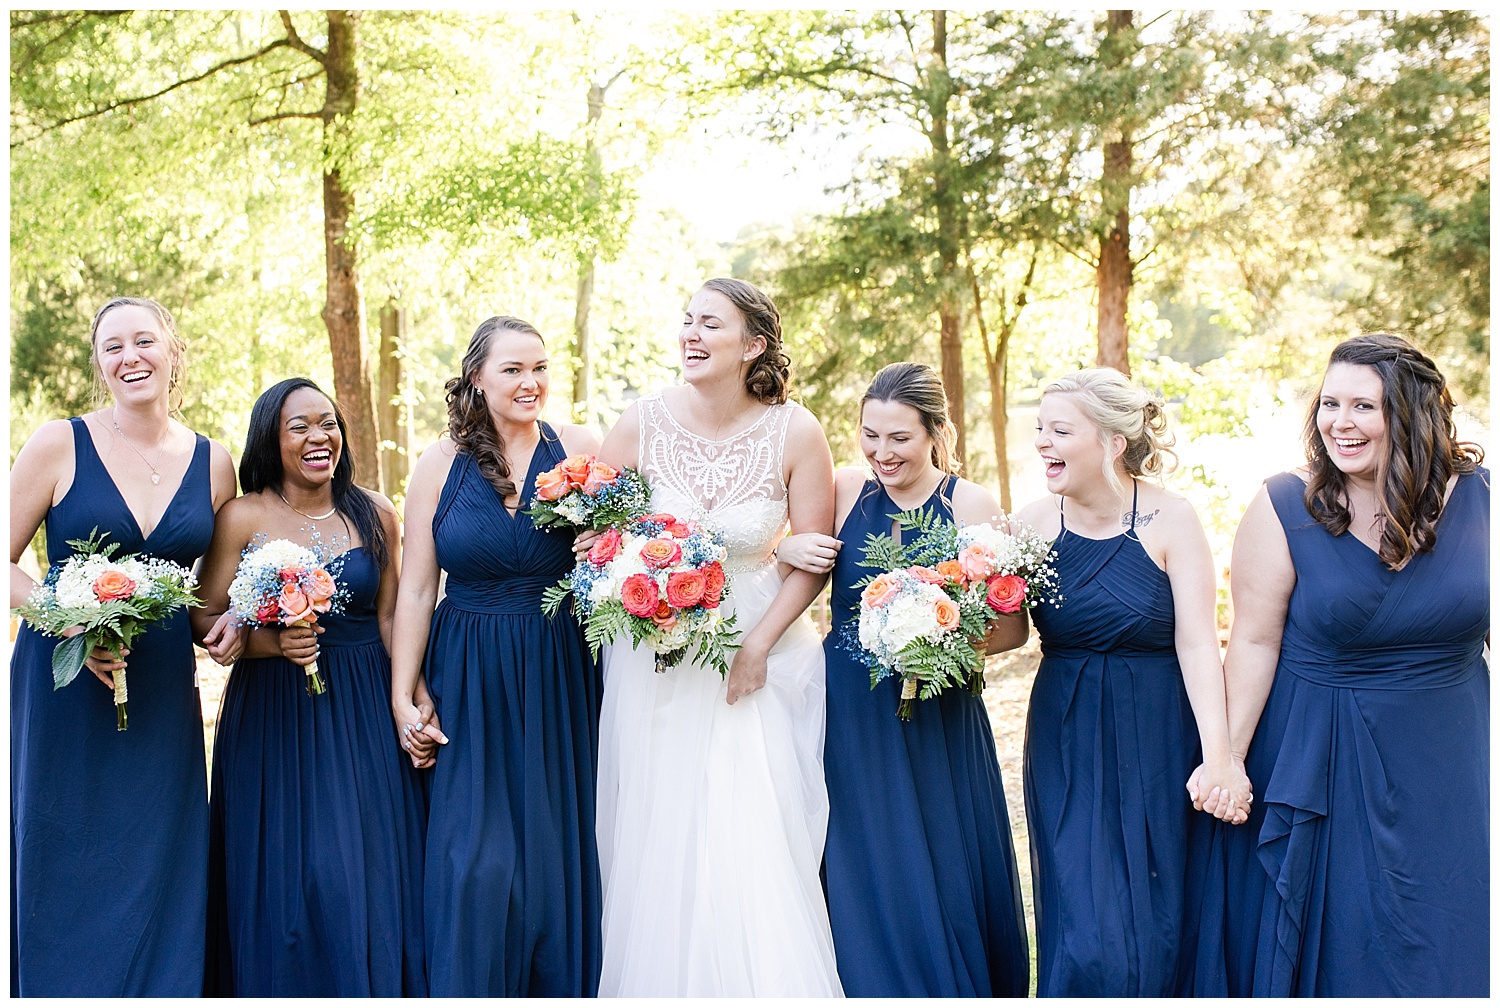 fun bridesmaids in navy blue